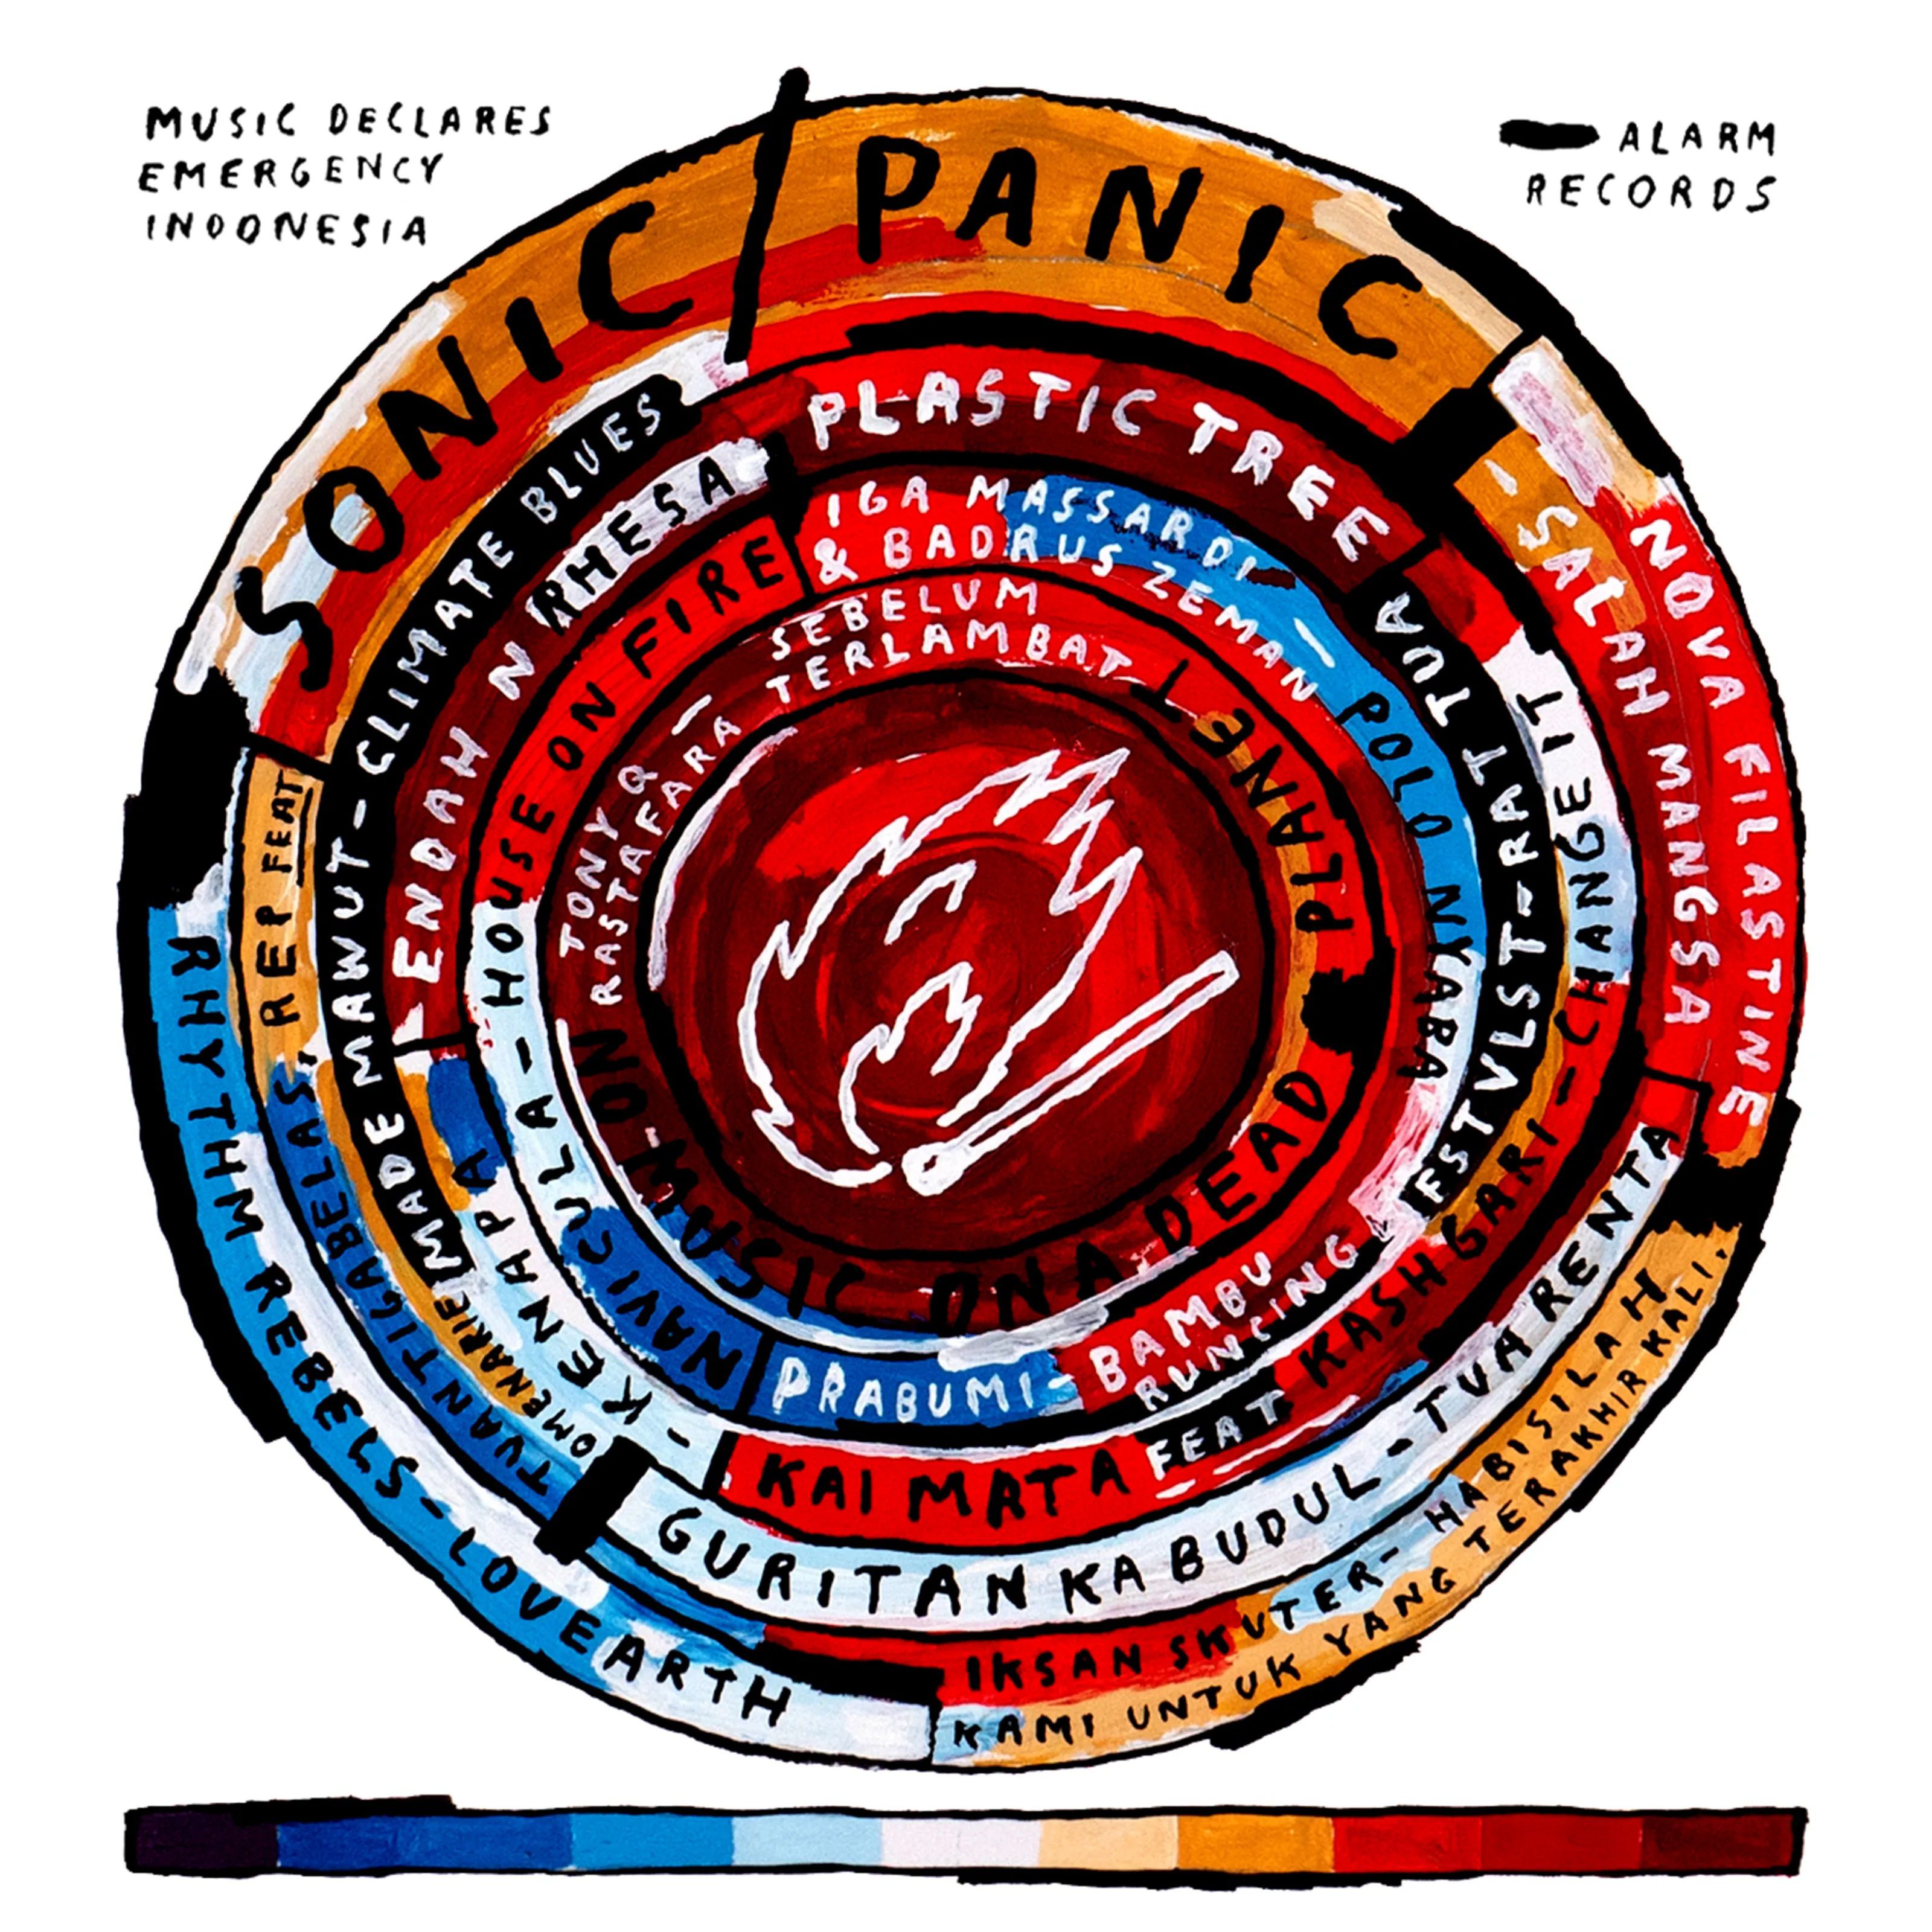 Album Sonic/Panic